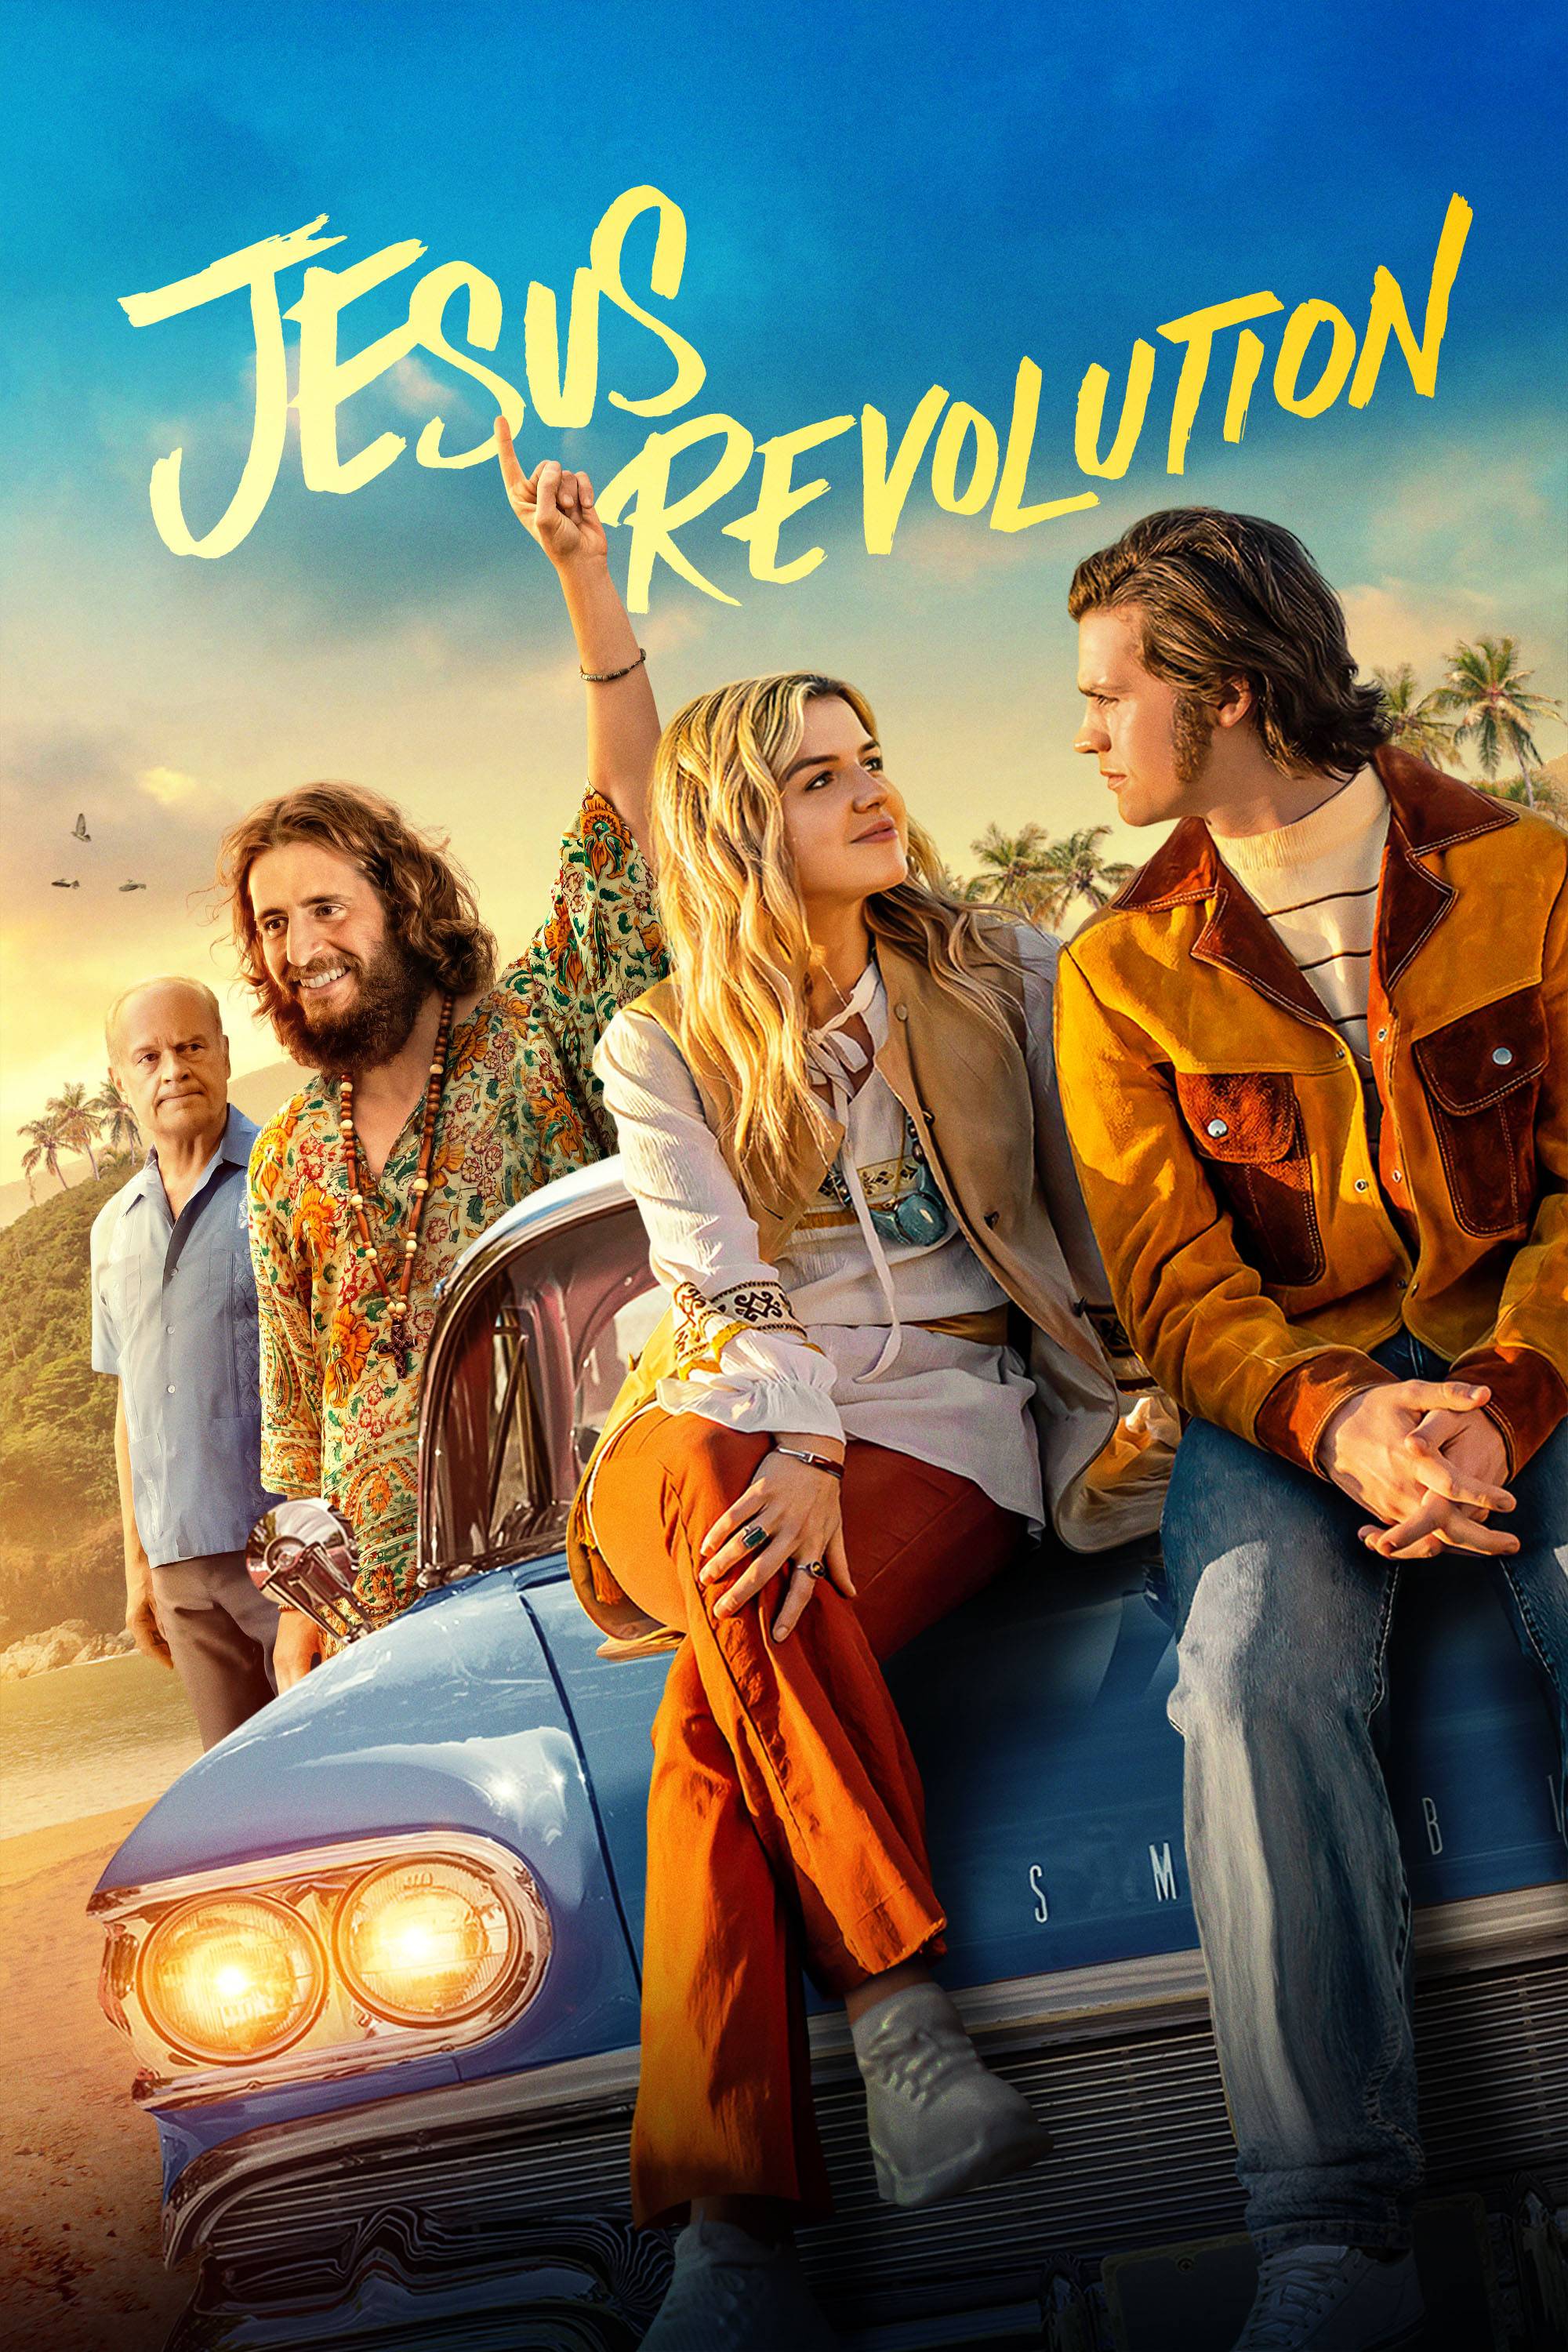 plugged in movie reviews jesus revolution